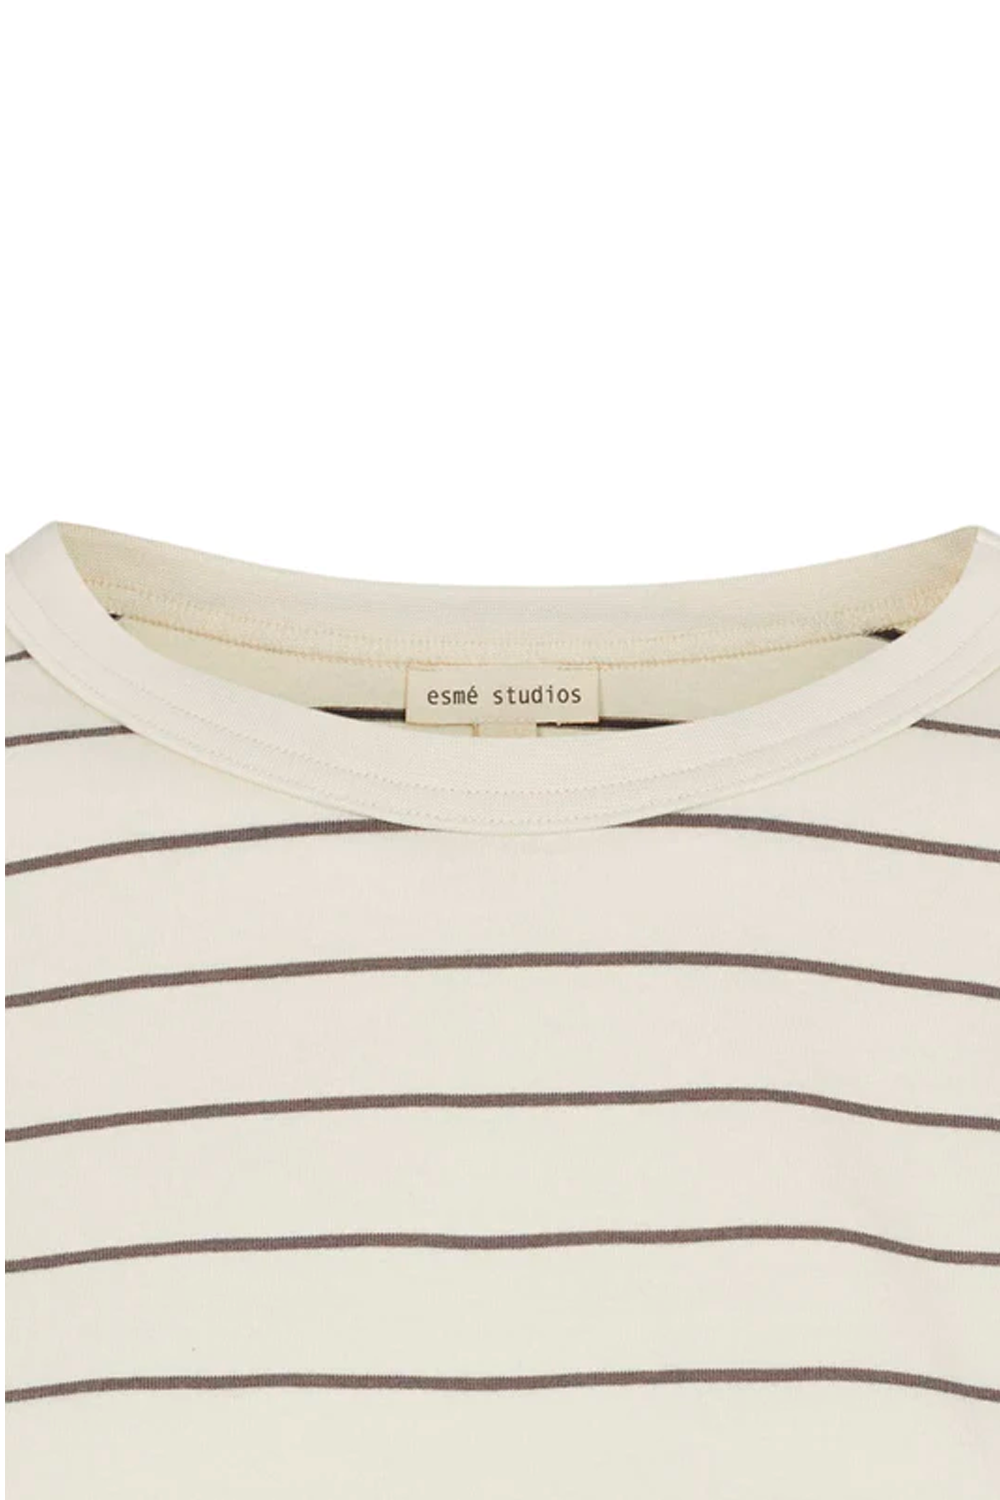 Signe Striped Boxy T-shirt, Buttercream